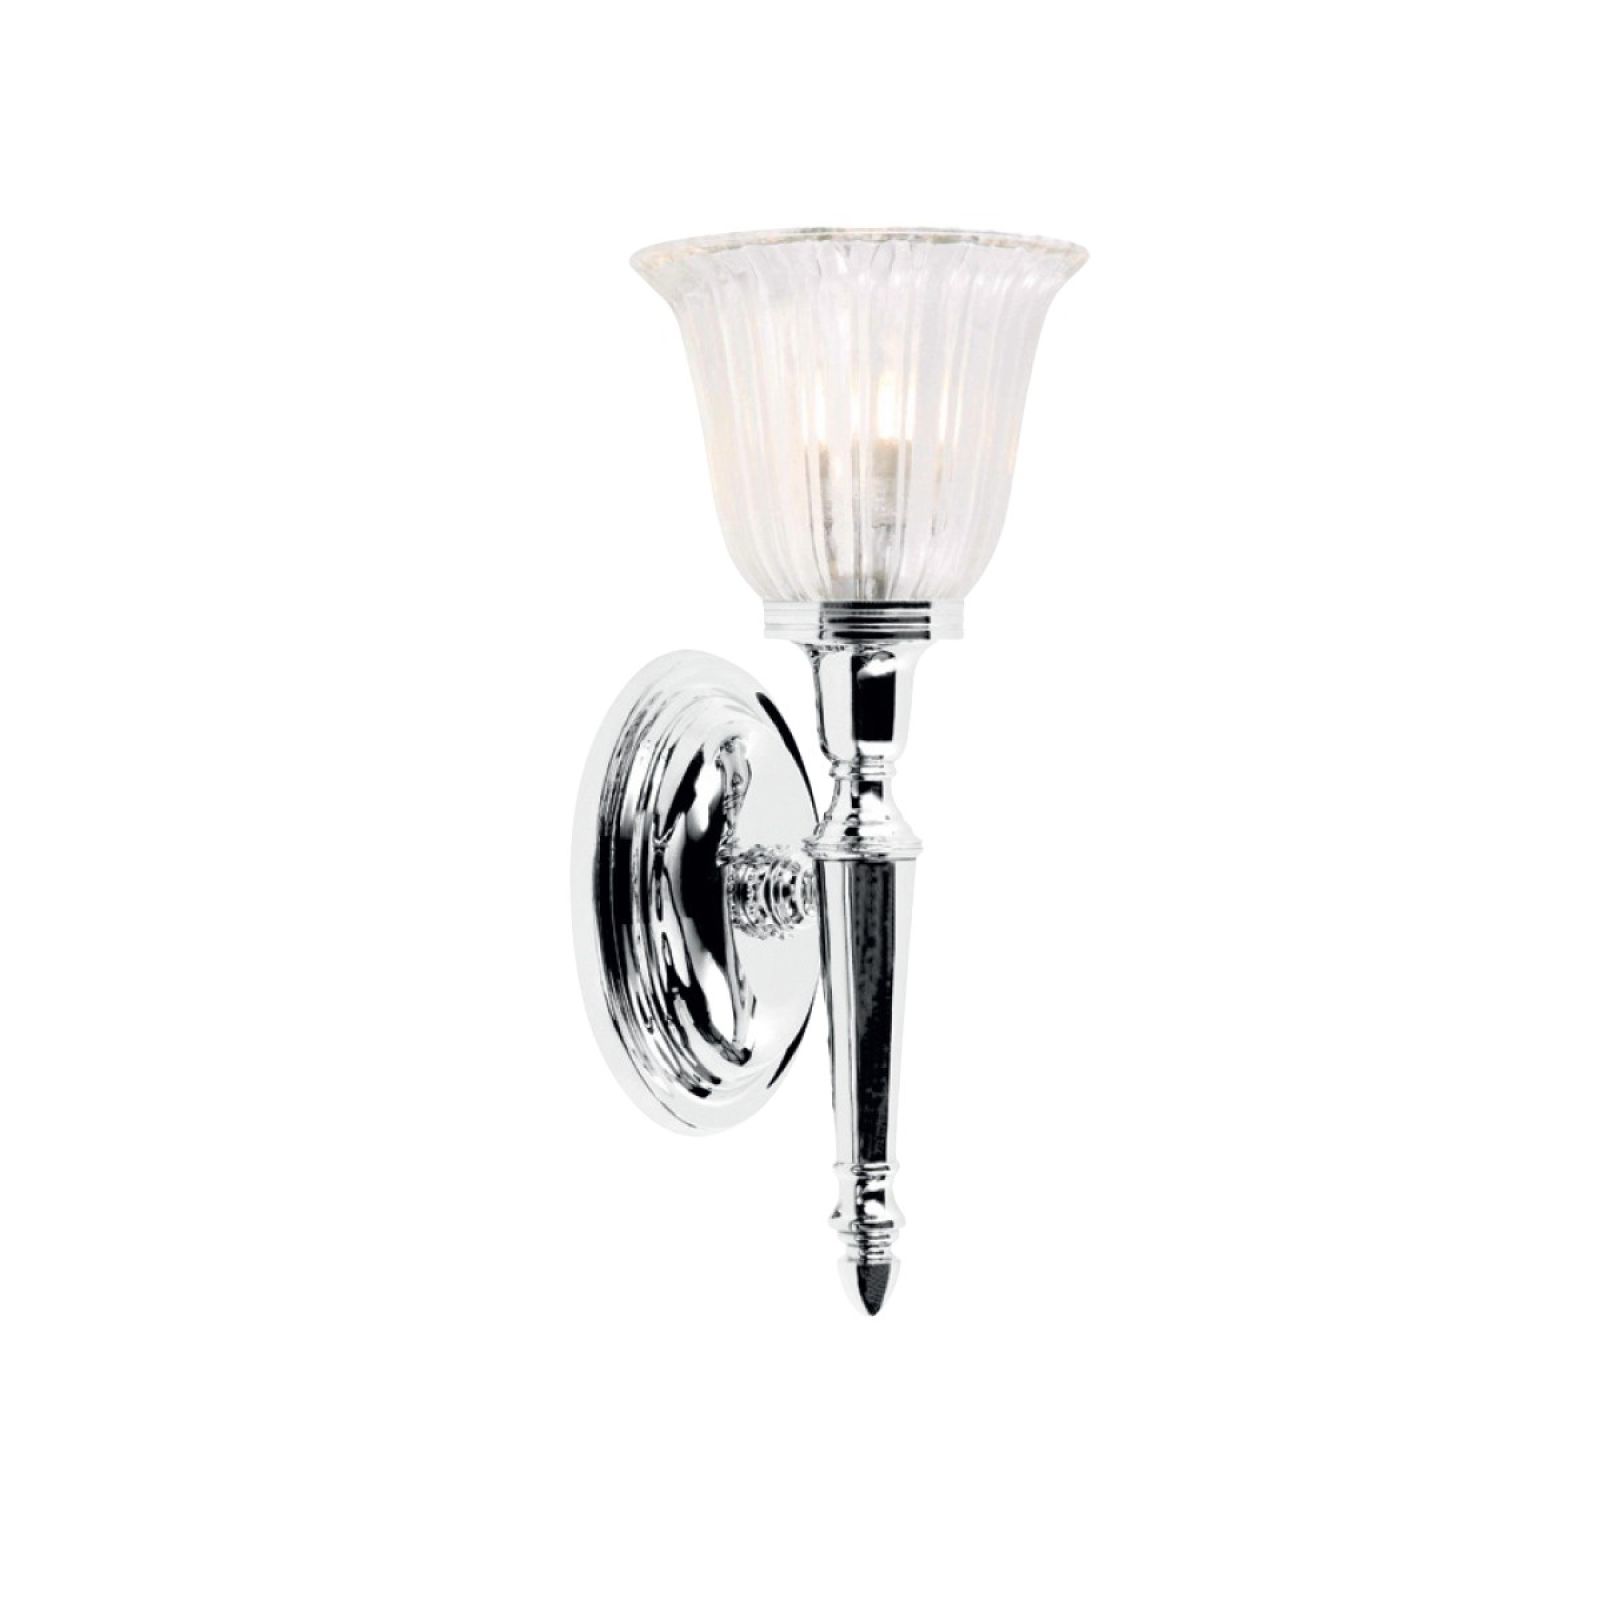 Bathroom wall light - Ryde 1 in polished chrome